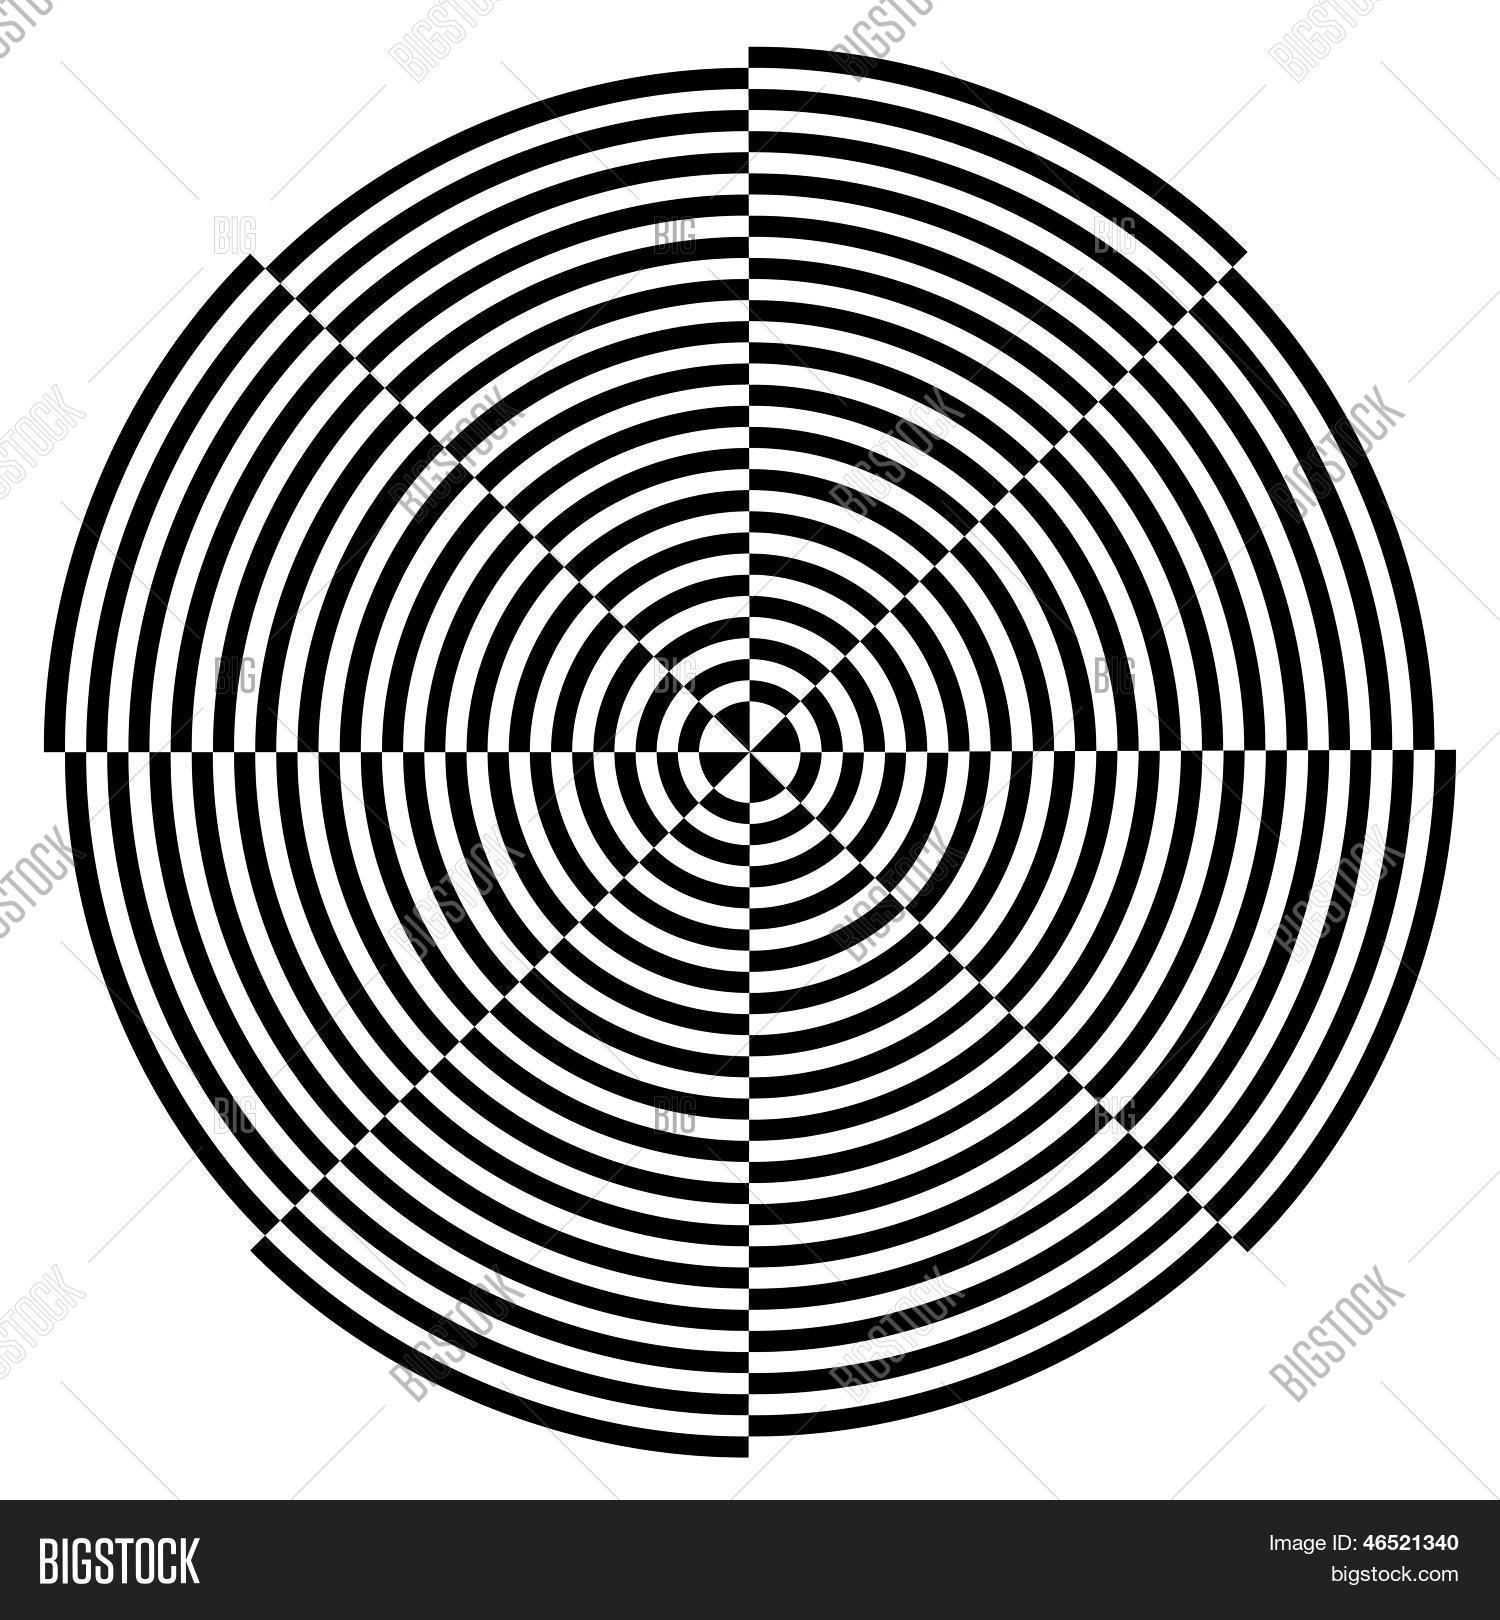 Optical Illusion, Spiral Design Vector & Photo | Bigstock